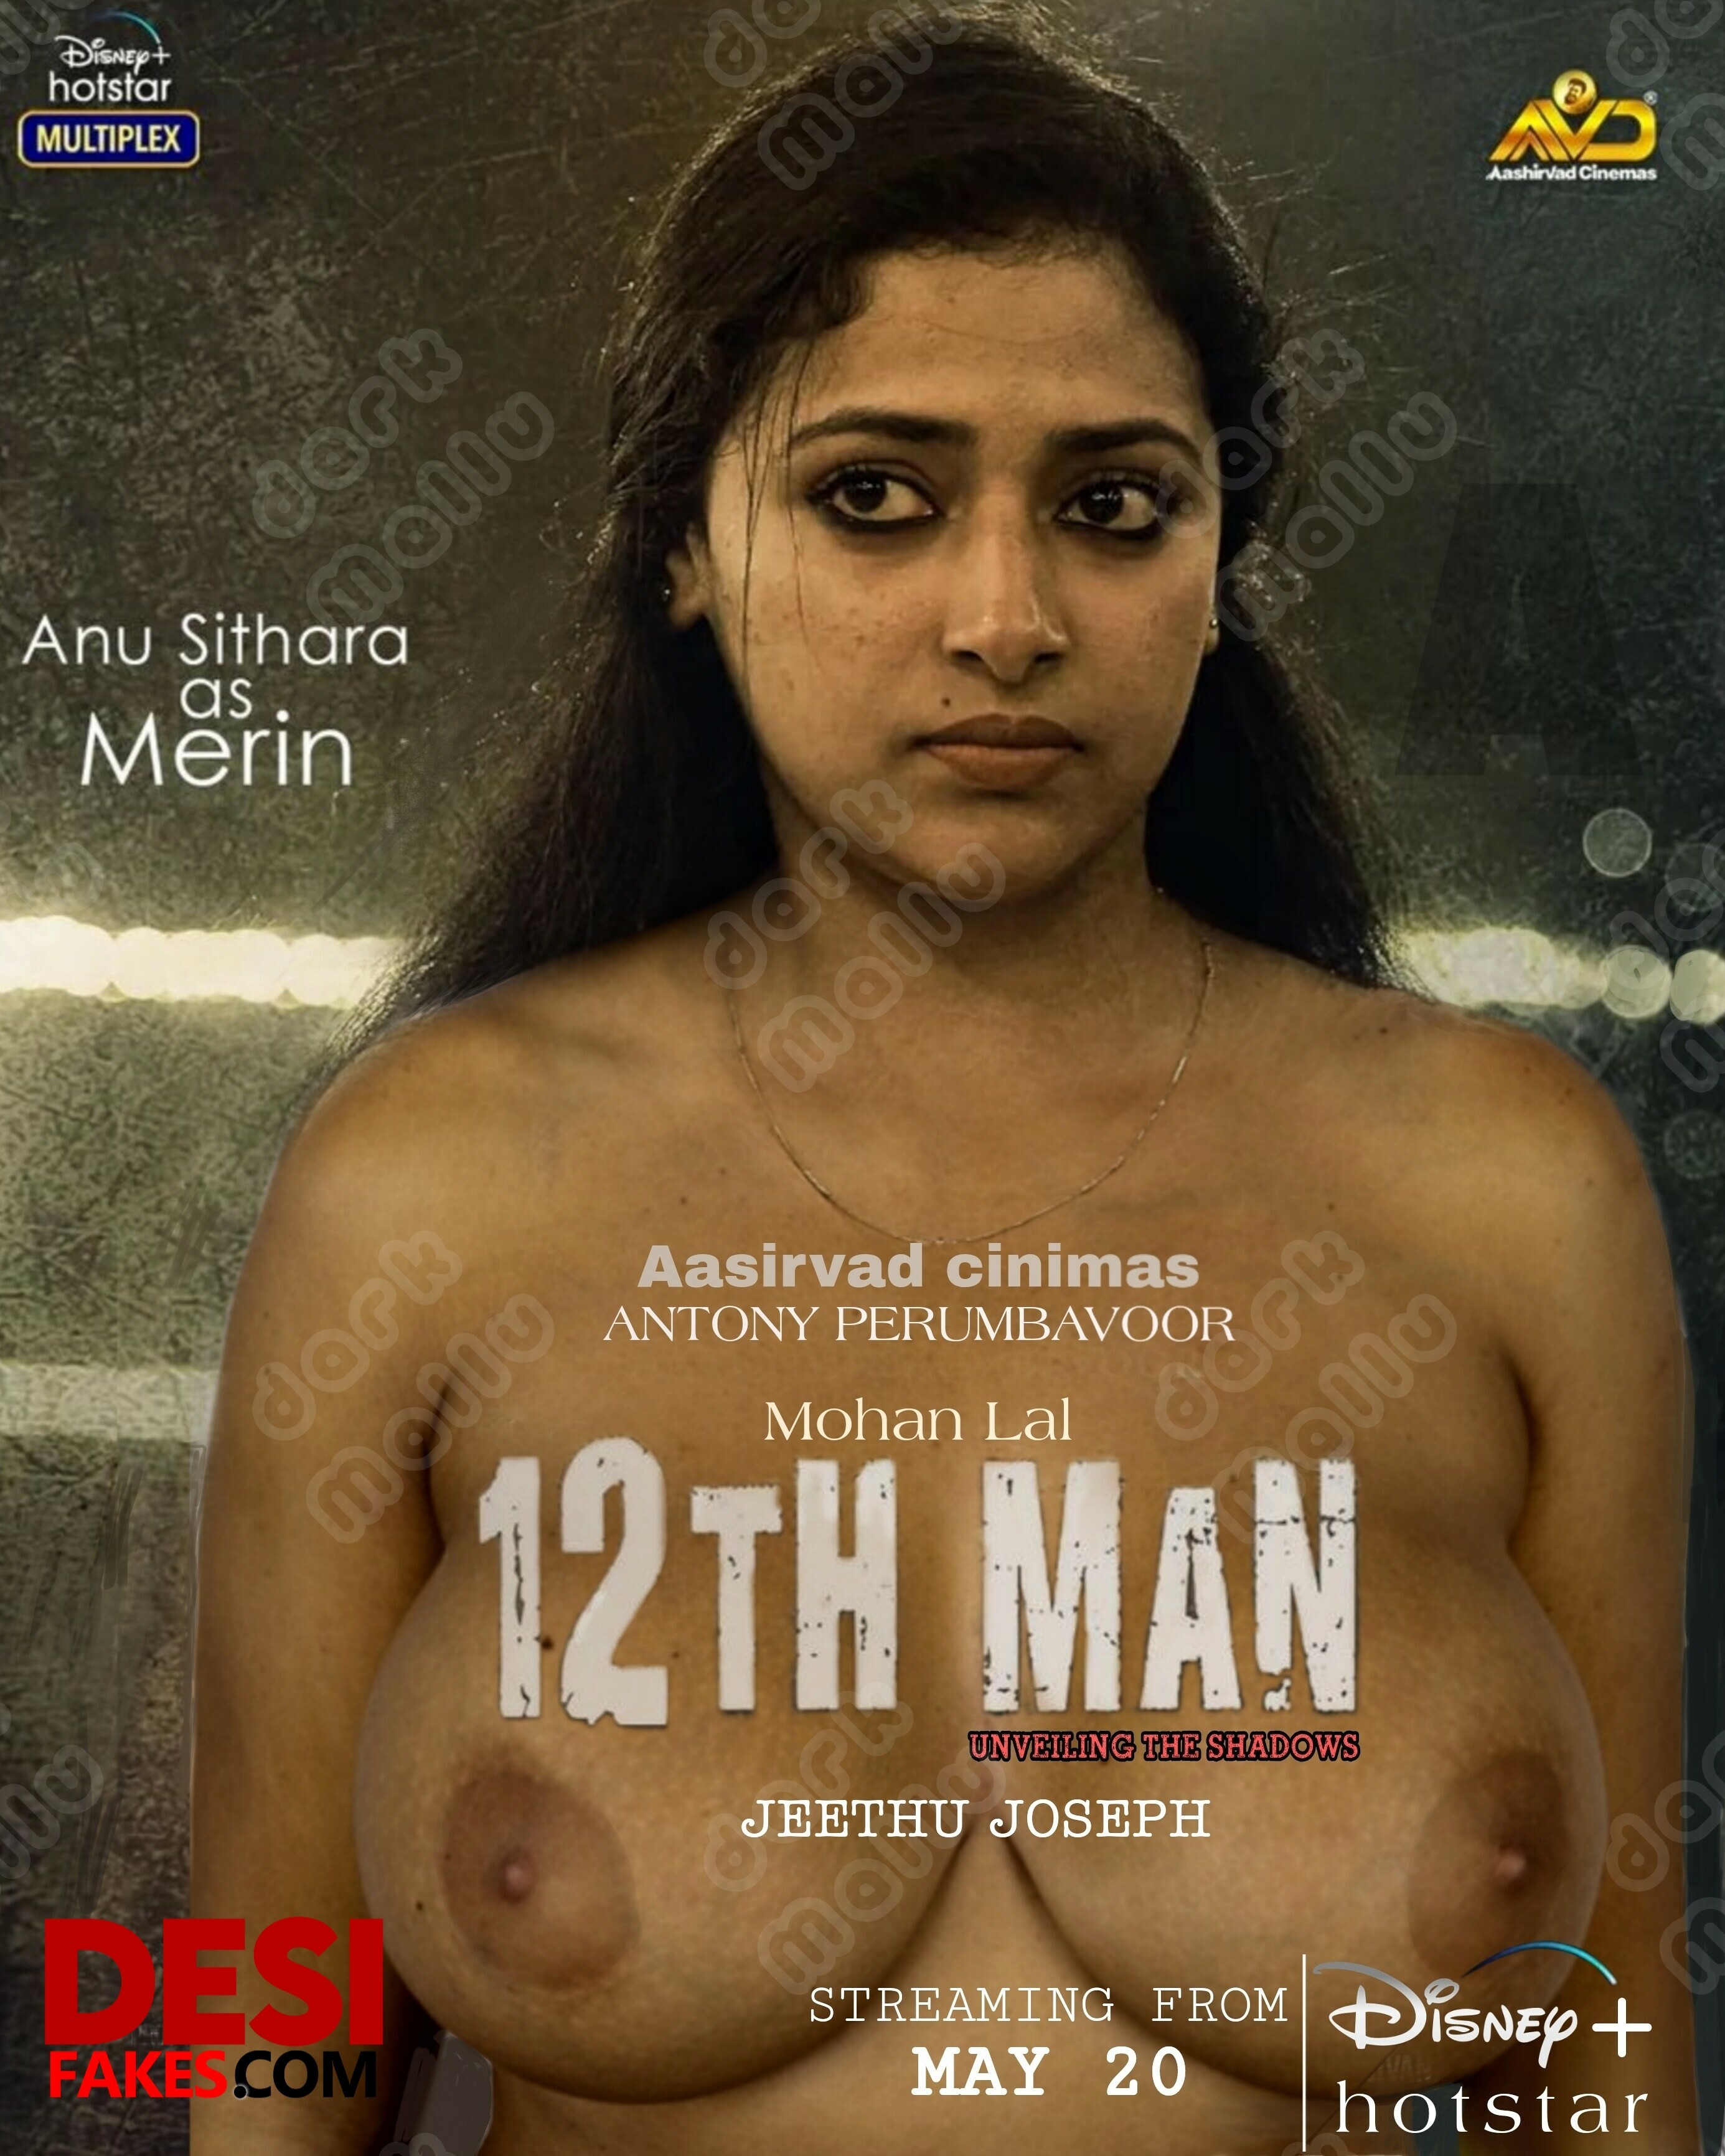 Hotstar Malayalam Sex Photo - Malayalam movie fake posters Fantacy - Malayalam Actress - | Page 3 |  Desifakes.com